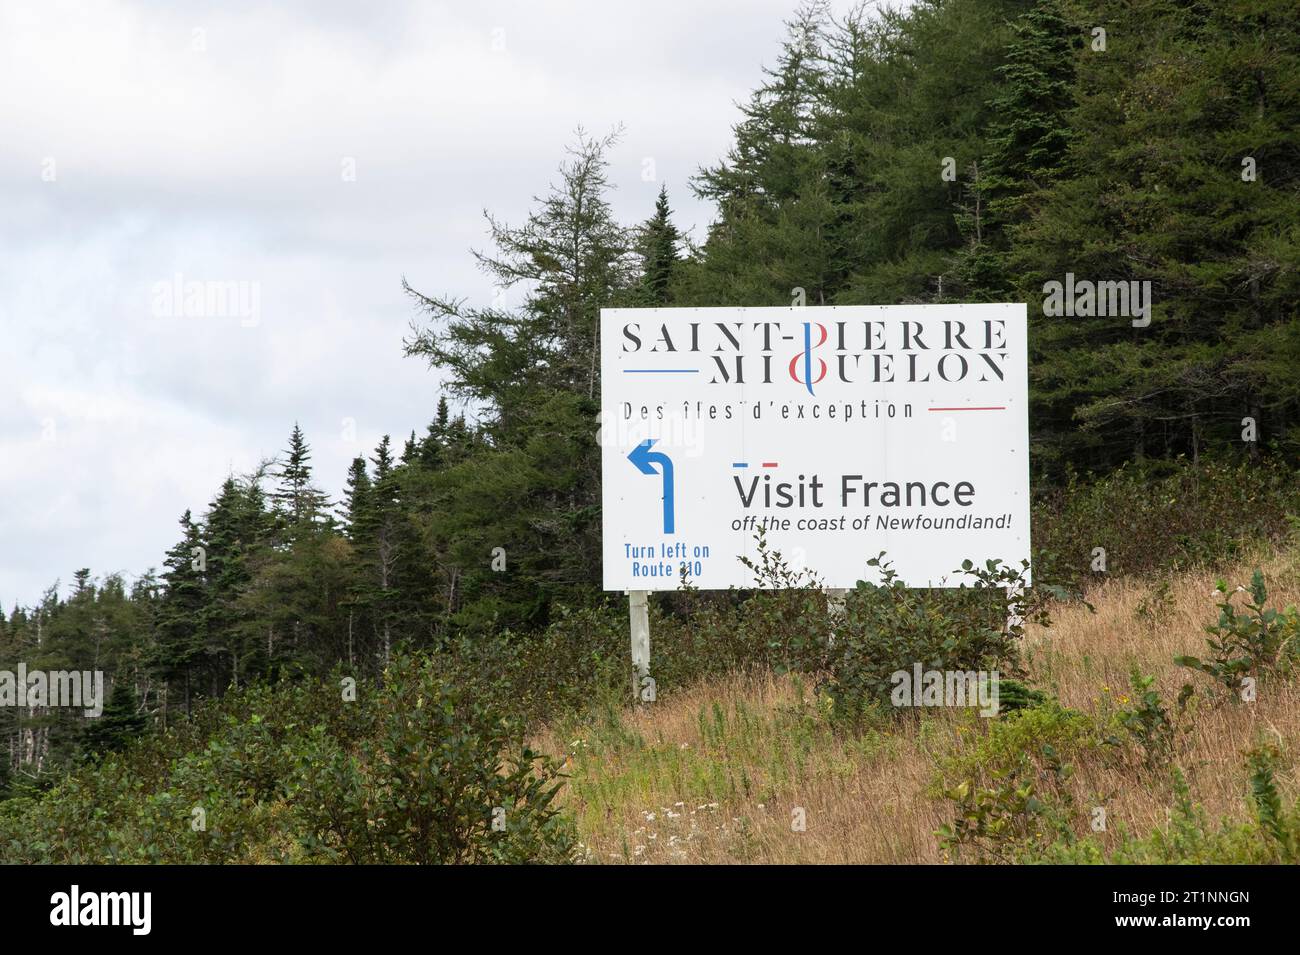 St Cartello Pierre & Miquelon Visit France all'uscita di Goobies, Newfoundland & Labrador, Canada Foto Stock